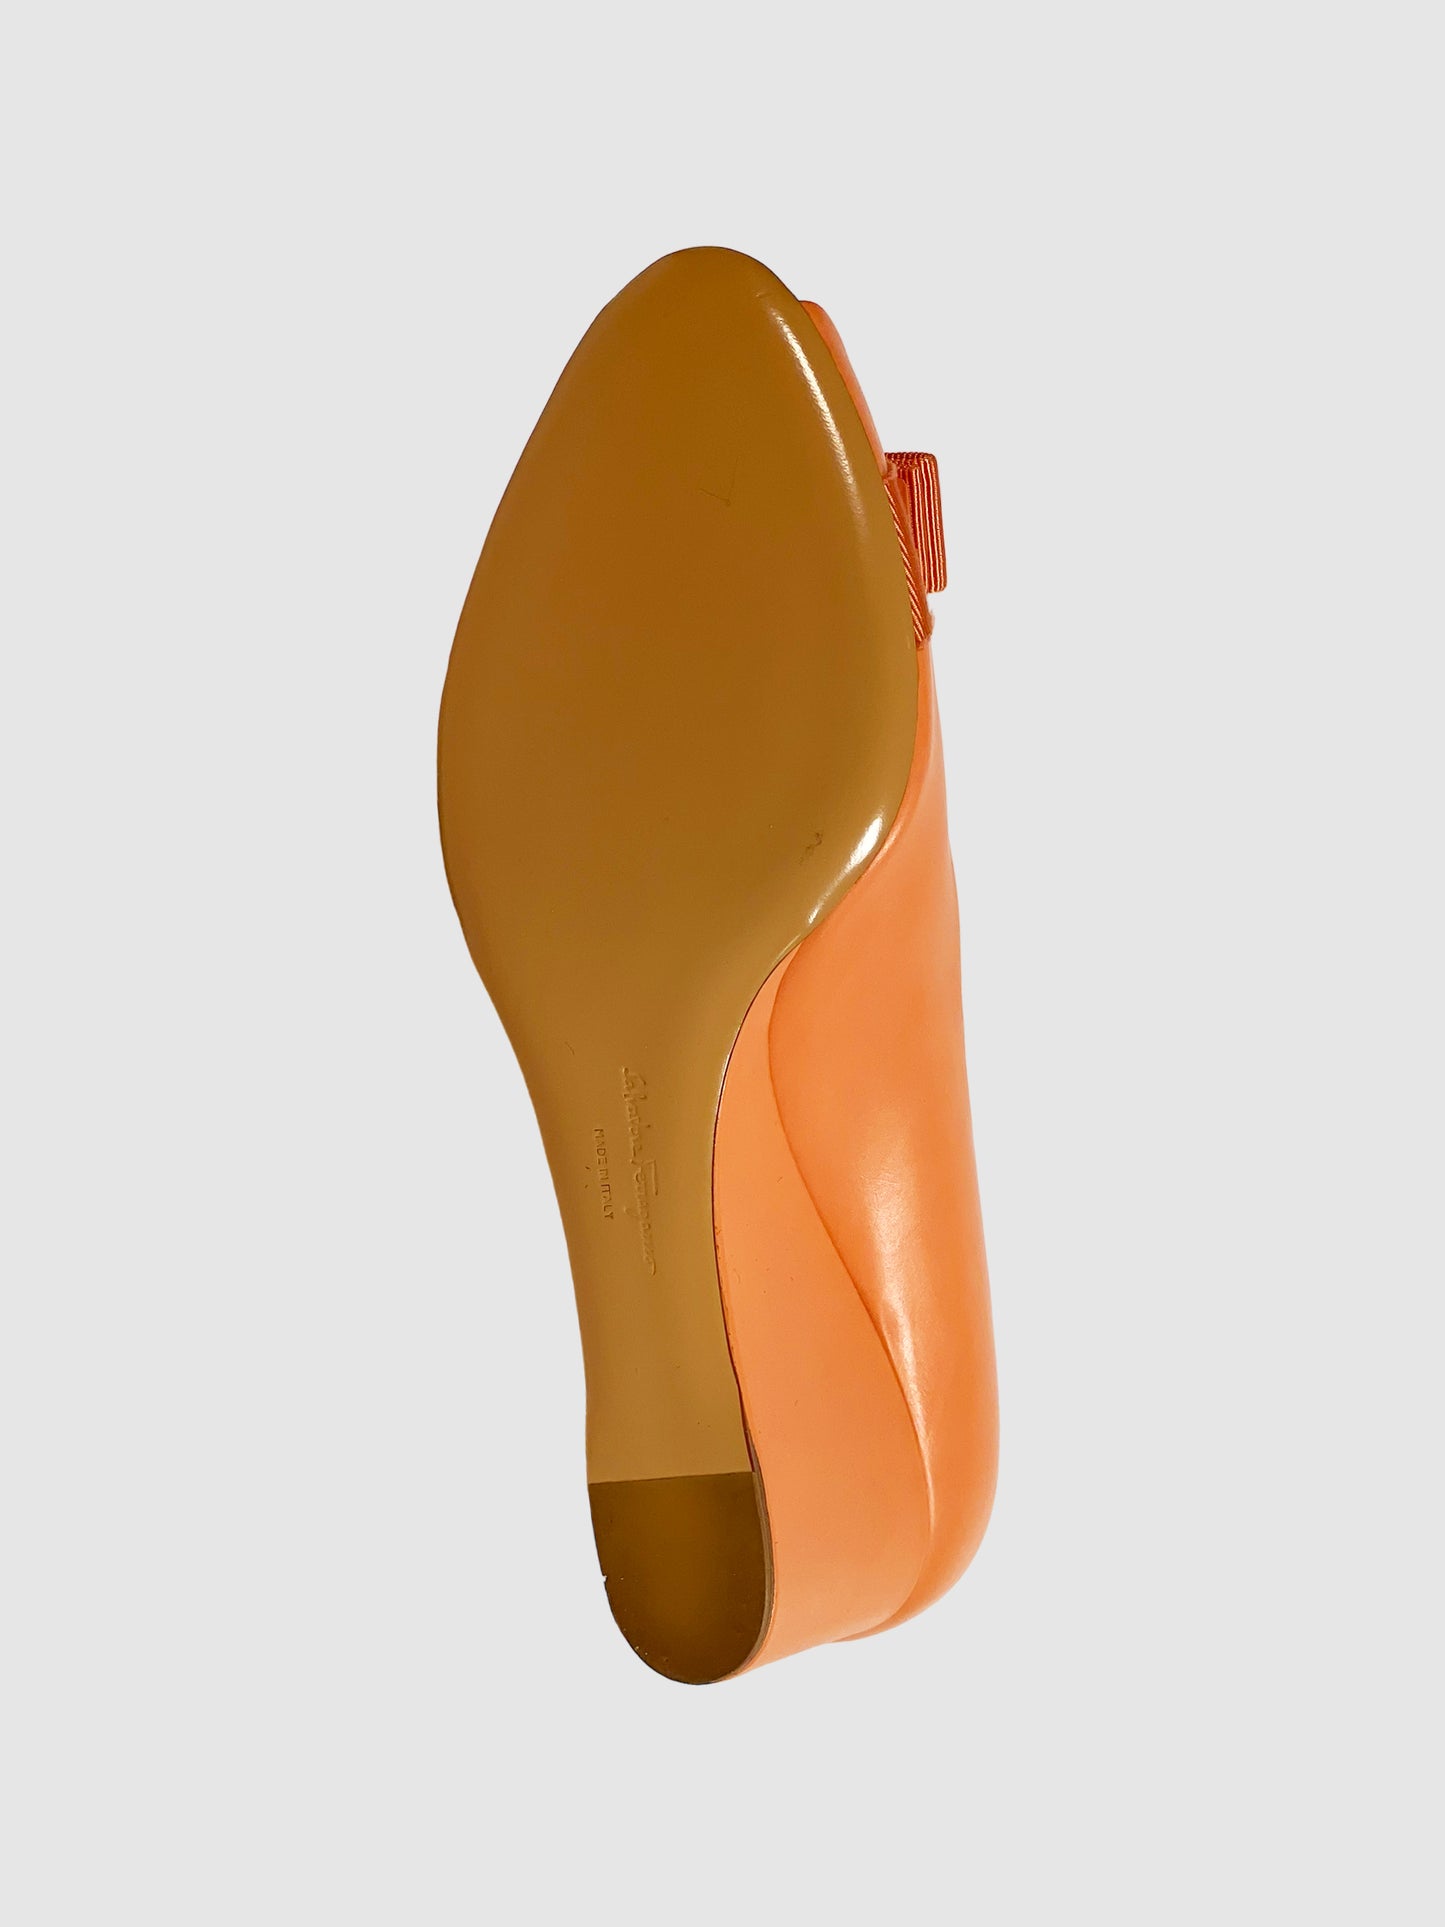 Salvatore Ferragamo Patent Leather Bow Accents Pumps - Size 9